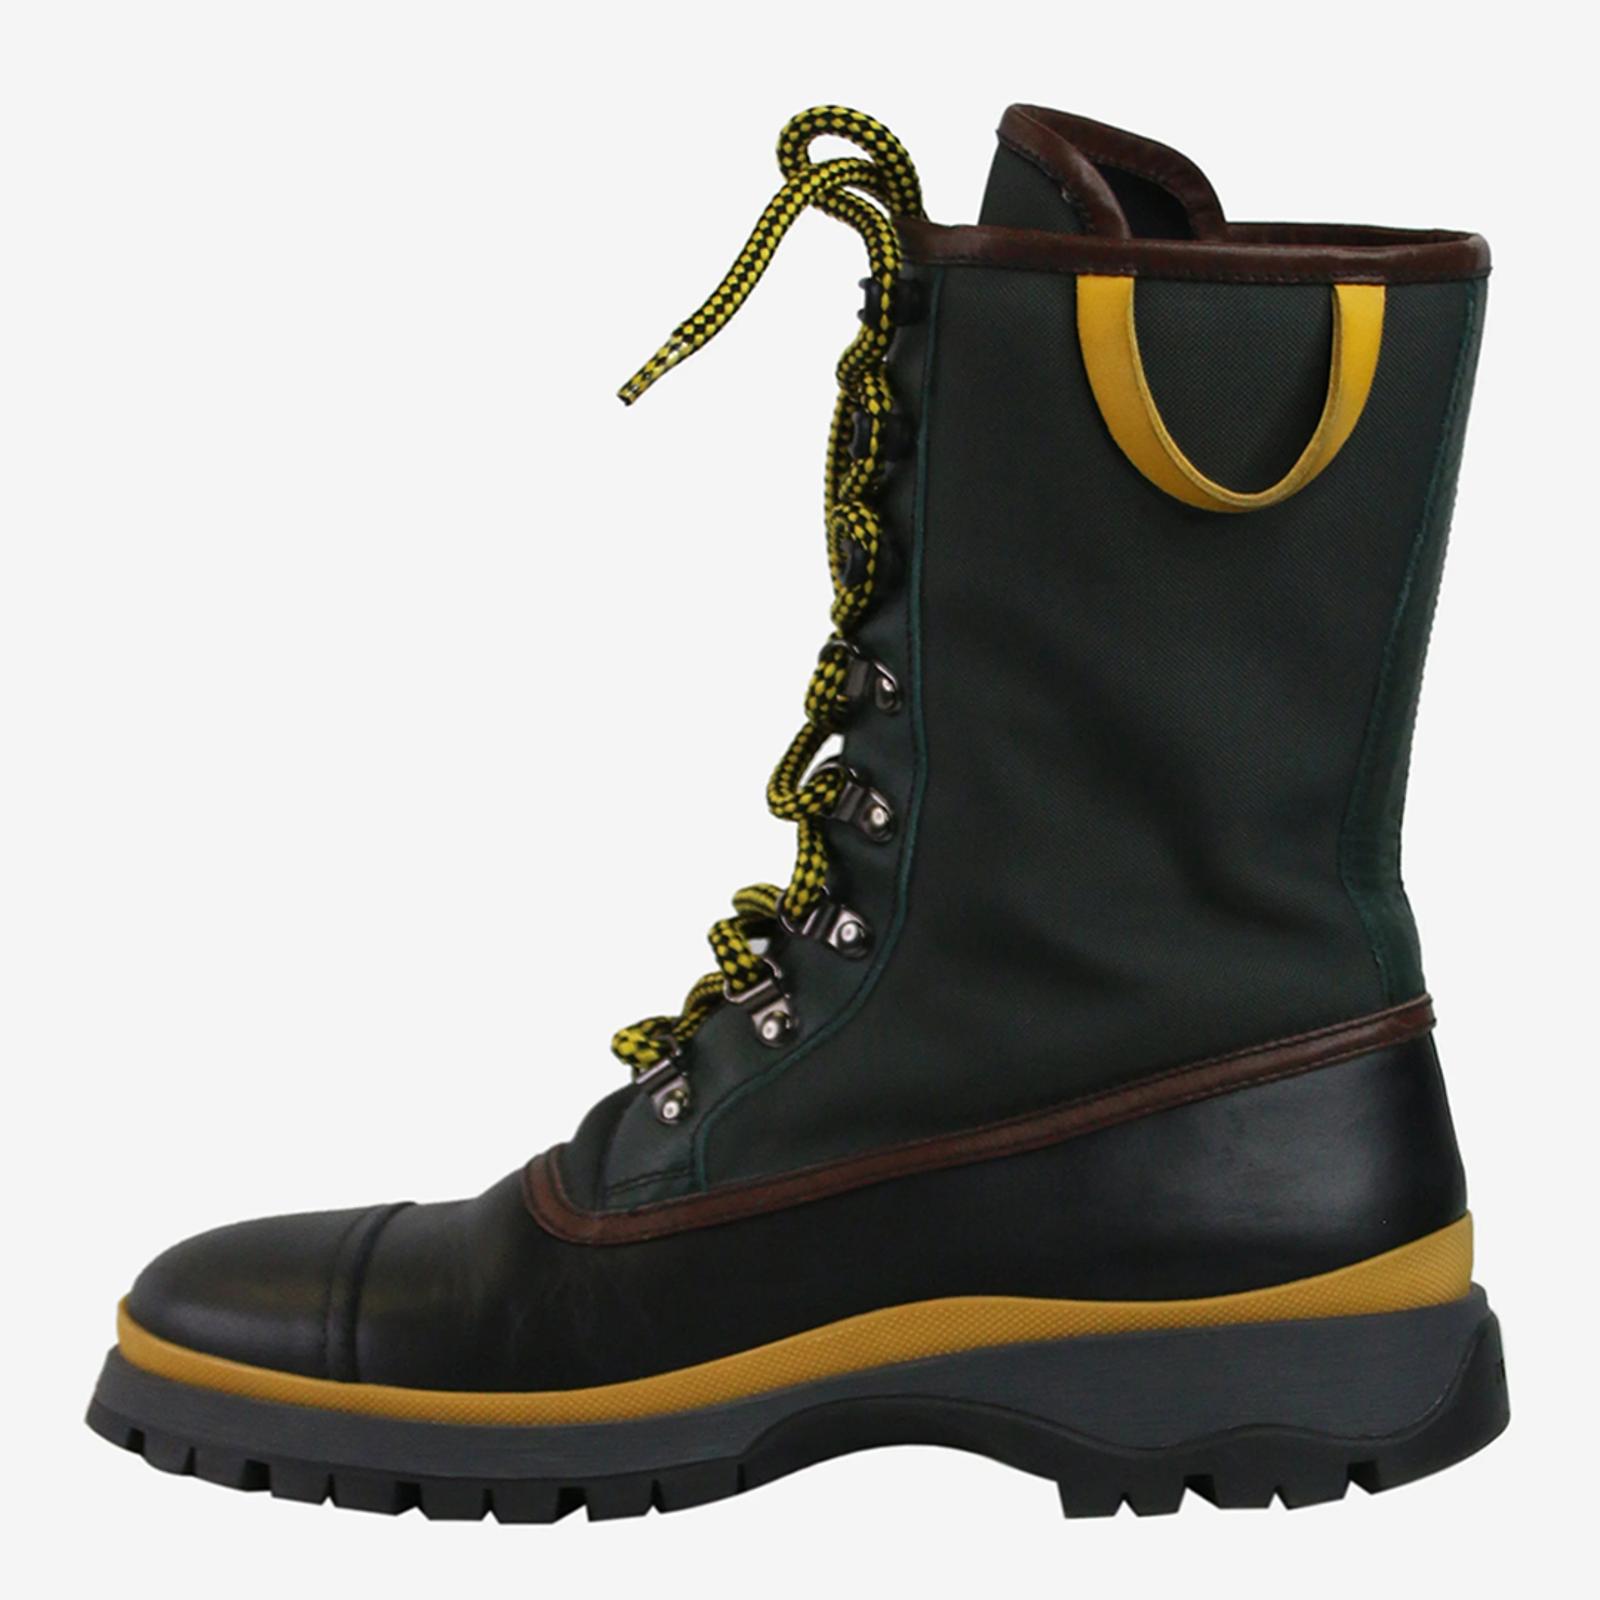 Green Hiking Boots UK 4.5 - BrandAlley